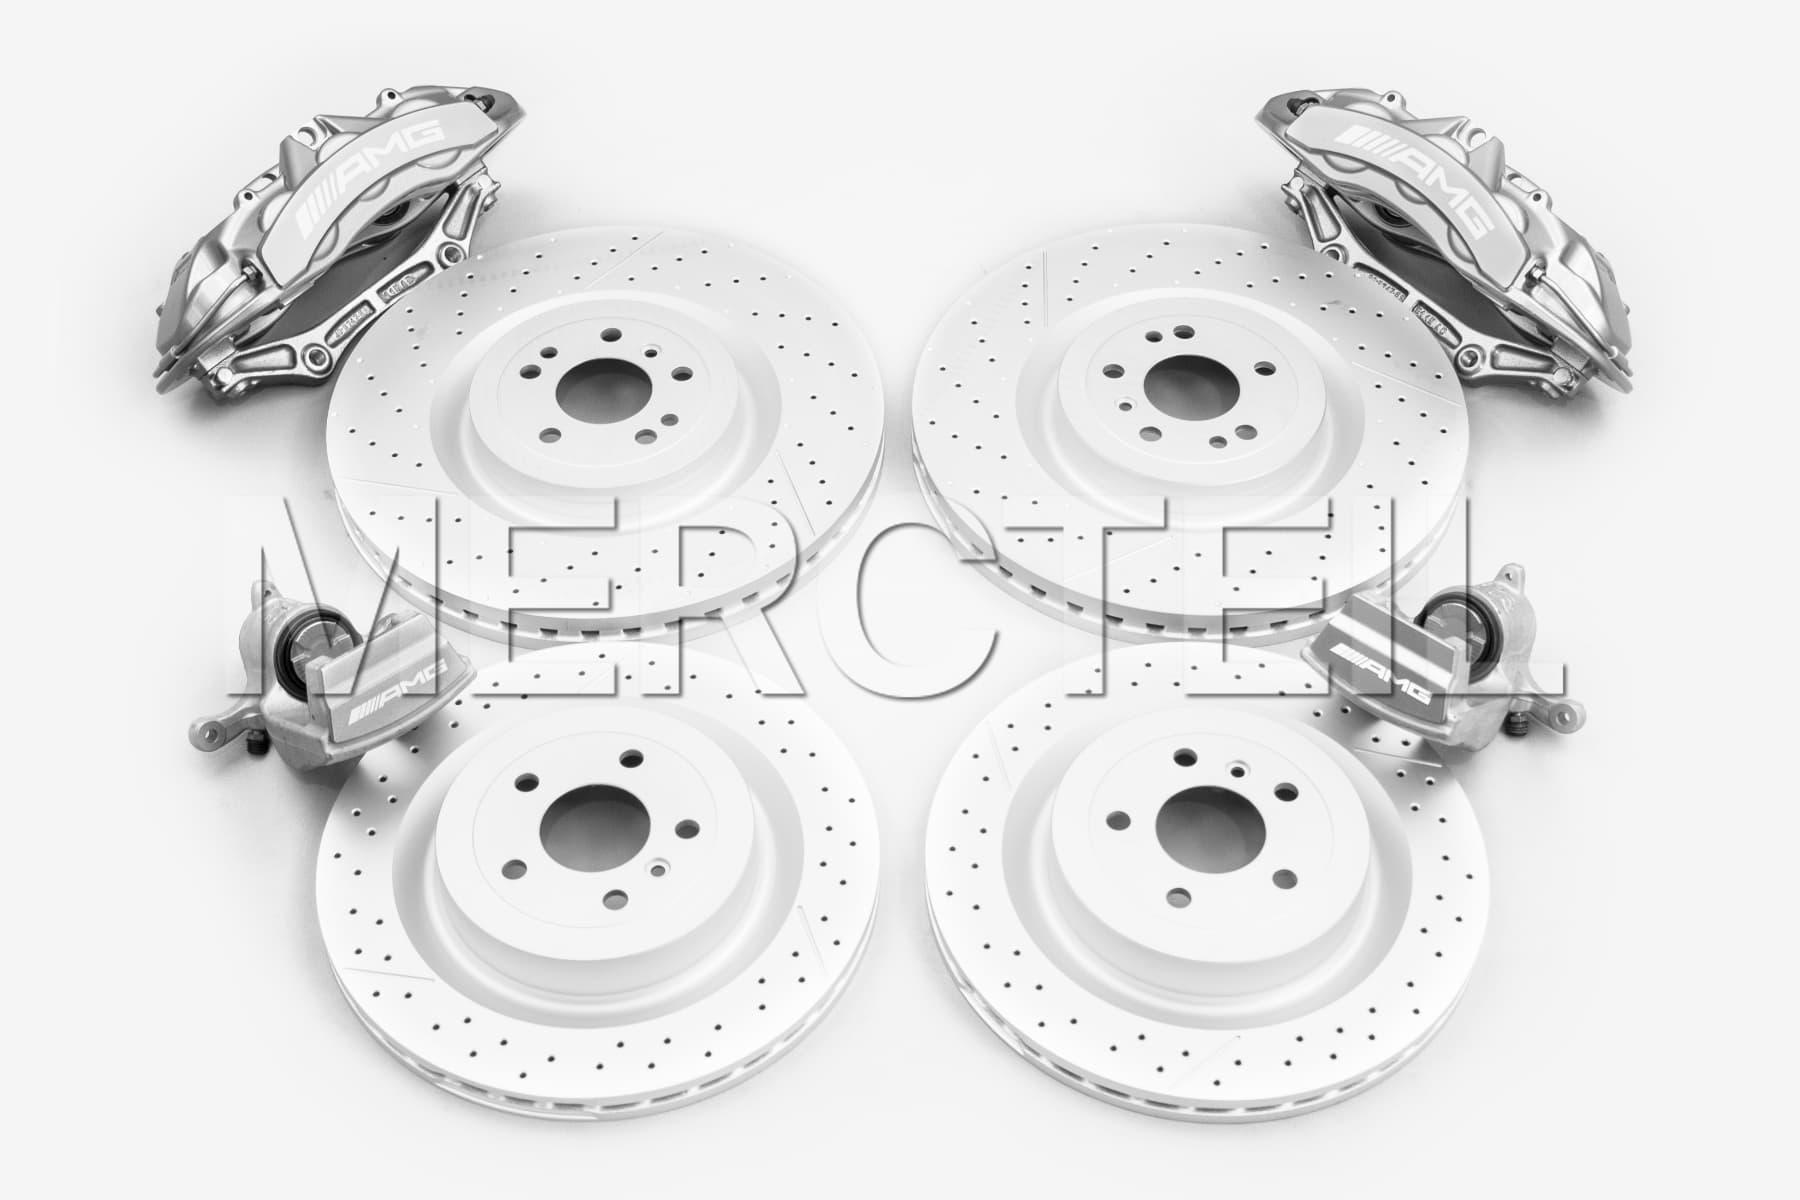 https://mercteil.com/s3/amg-gray-performance-brake-system-genuine-mercedes-amg-1655726687006-x2.jpg